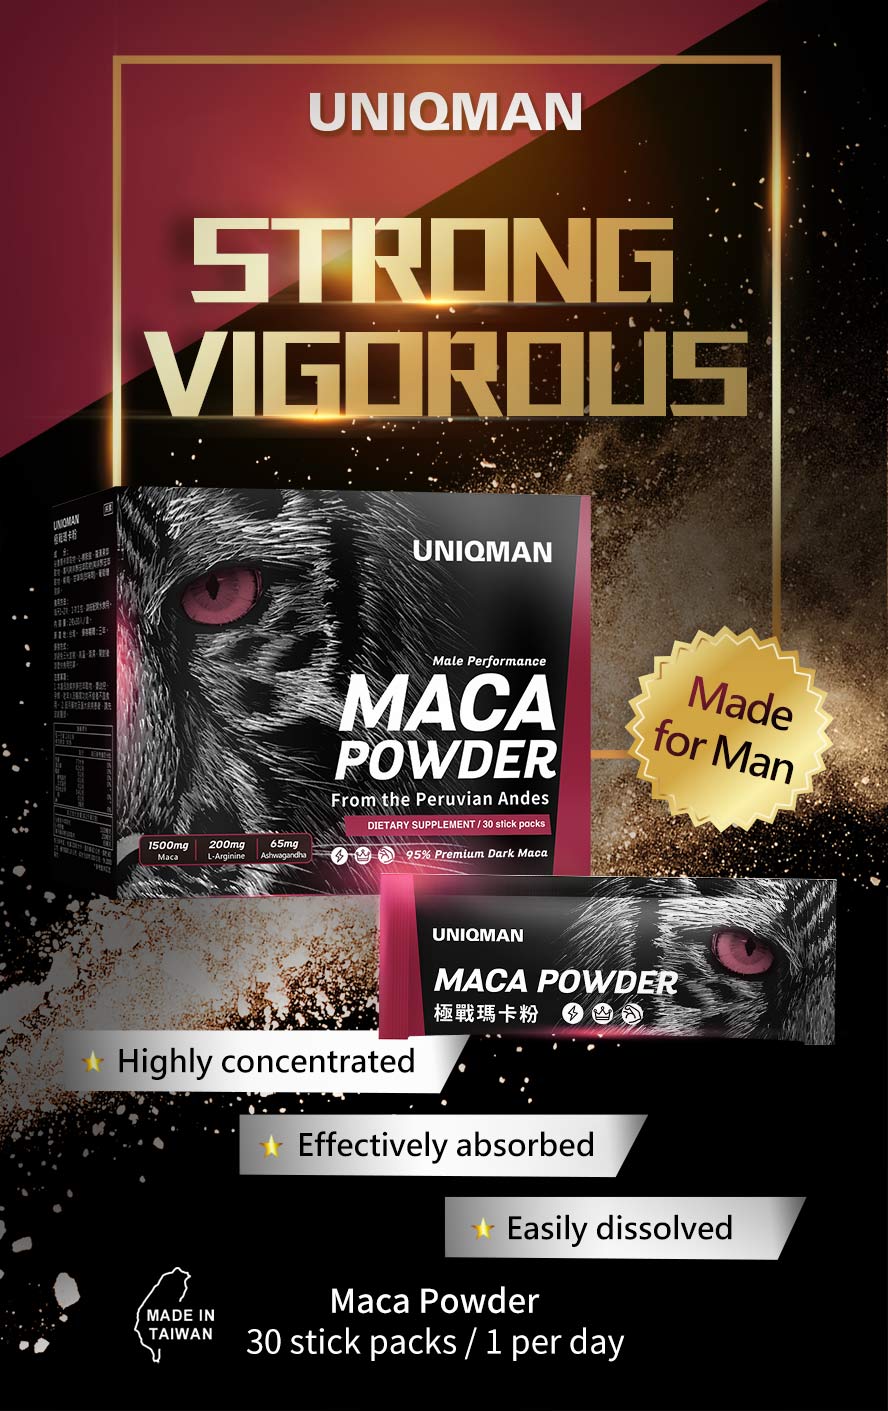 UNIQMAN Maca Powder improves your sexual performance.